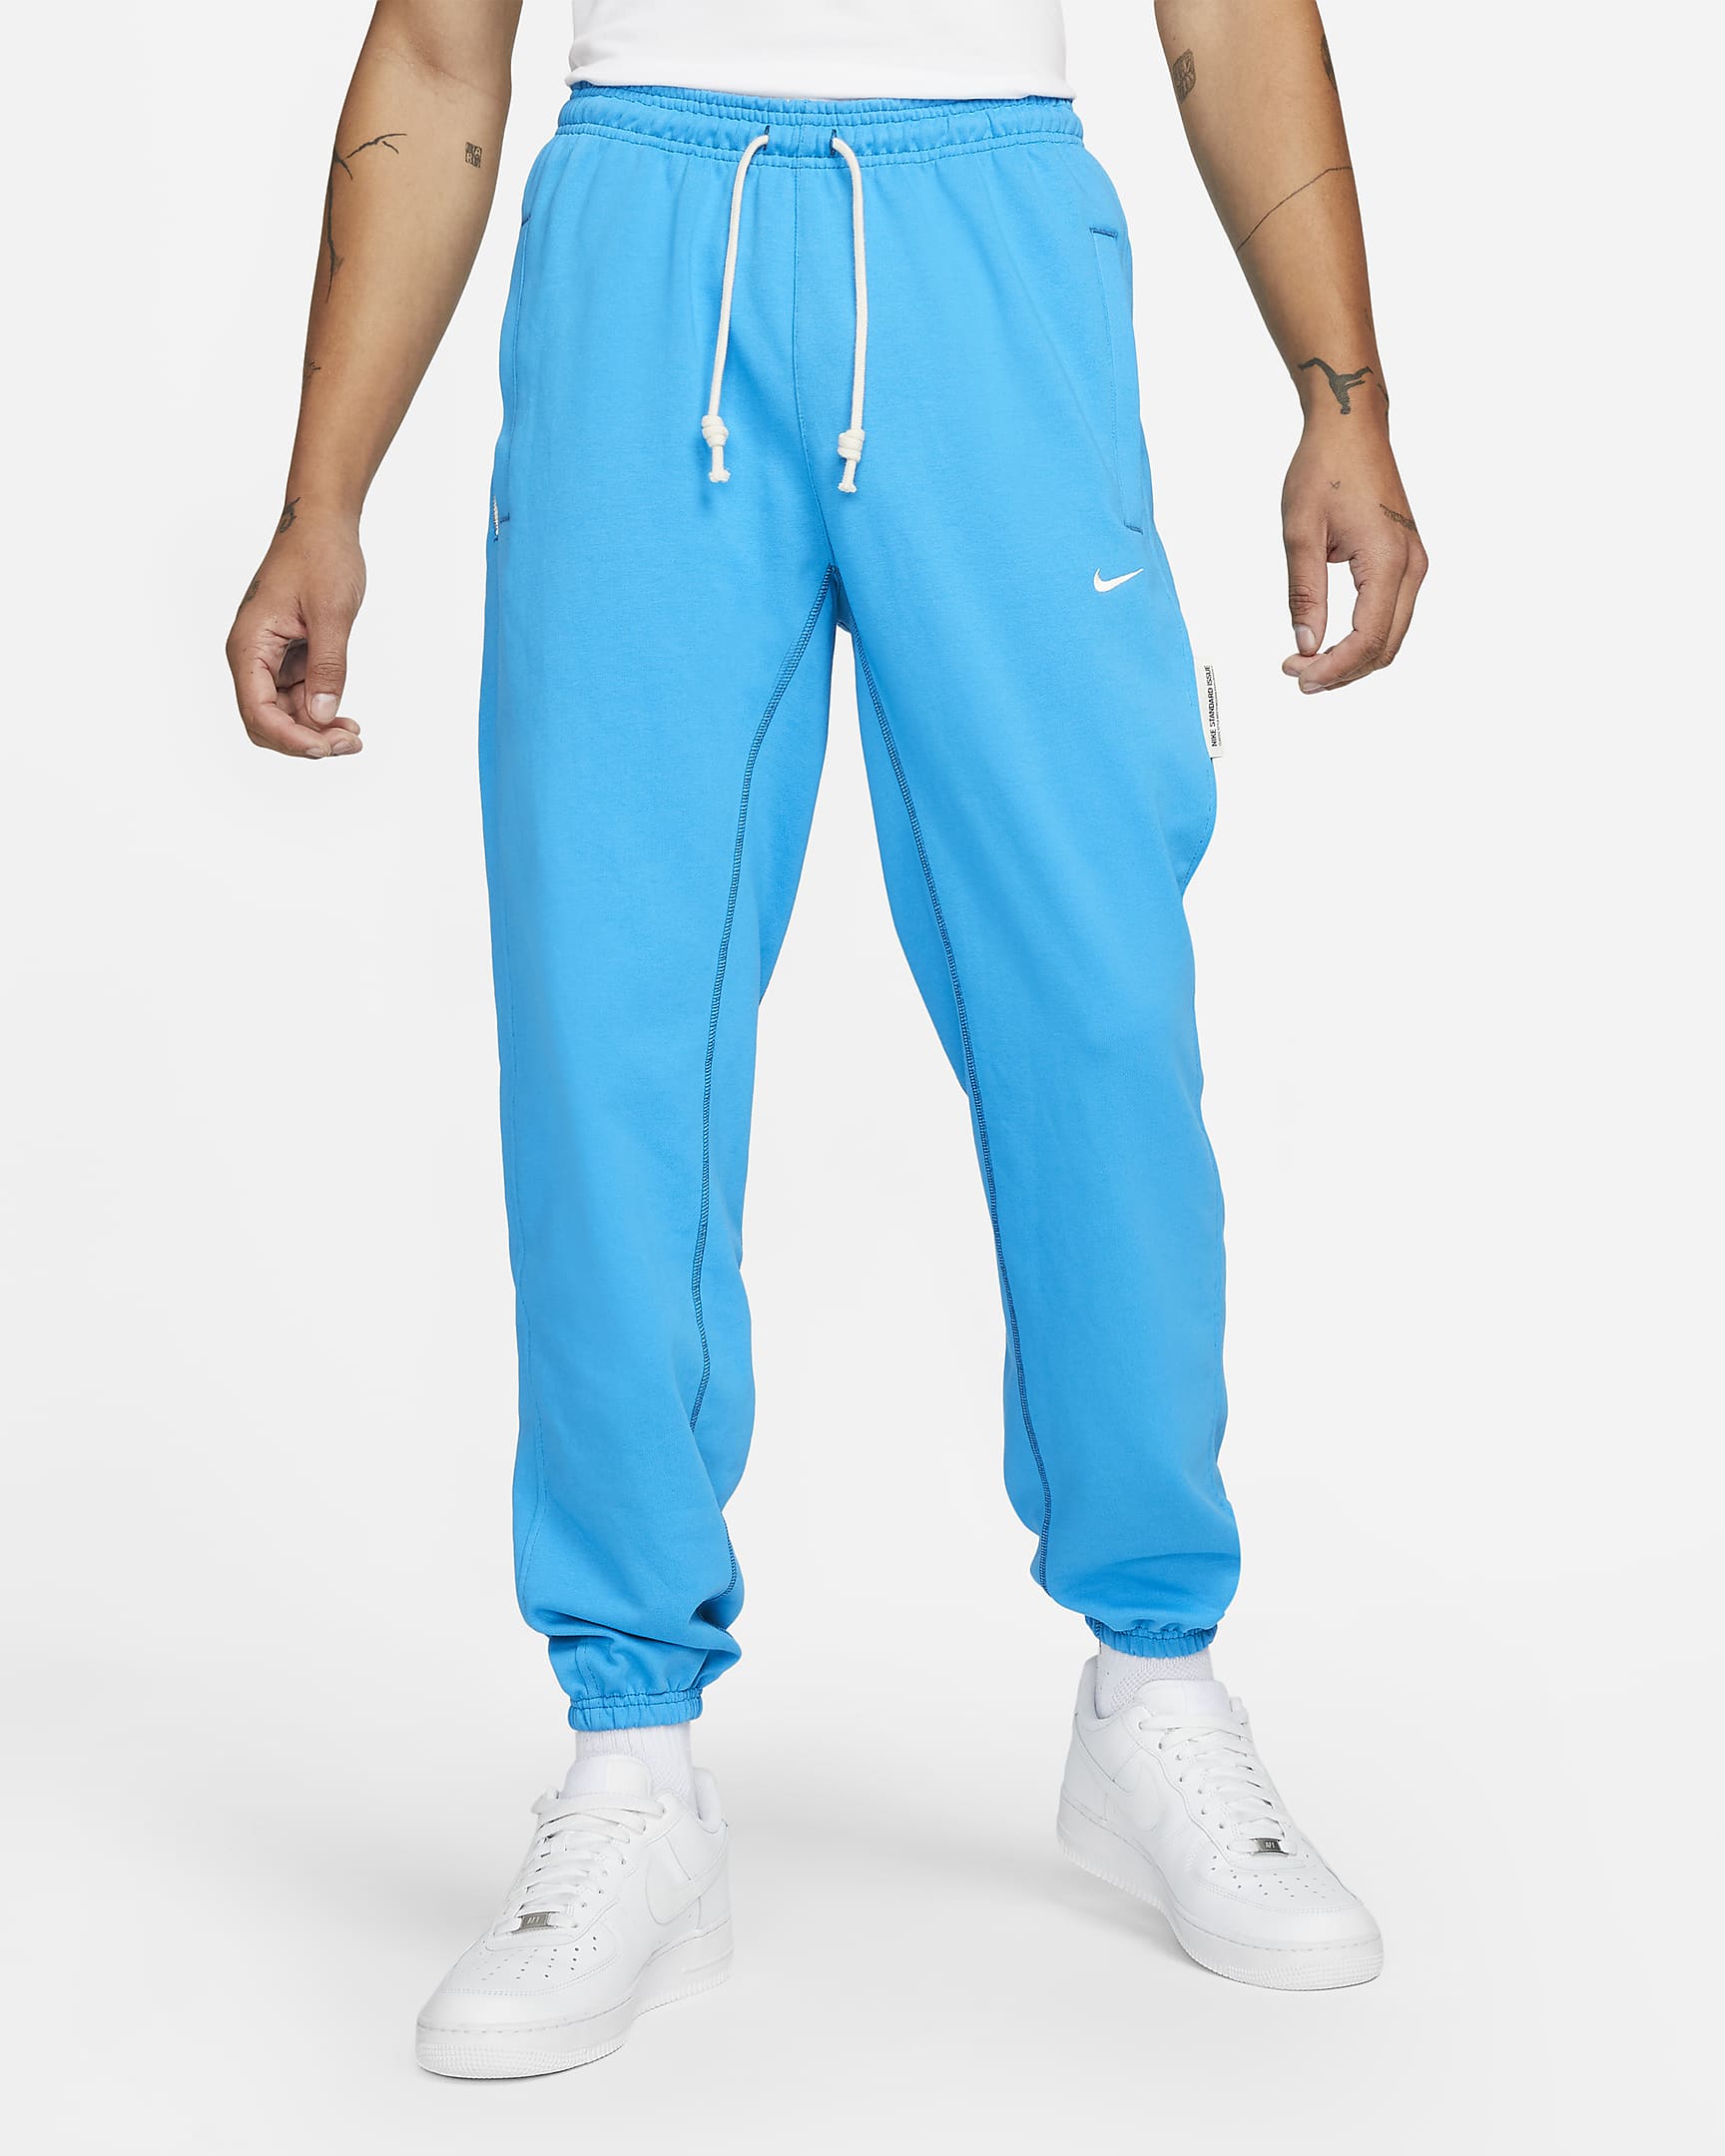 Nike Dri-FIT Standard Issue Men\'s Basketball Pants Laser Blue/Pale Ivory